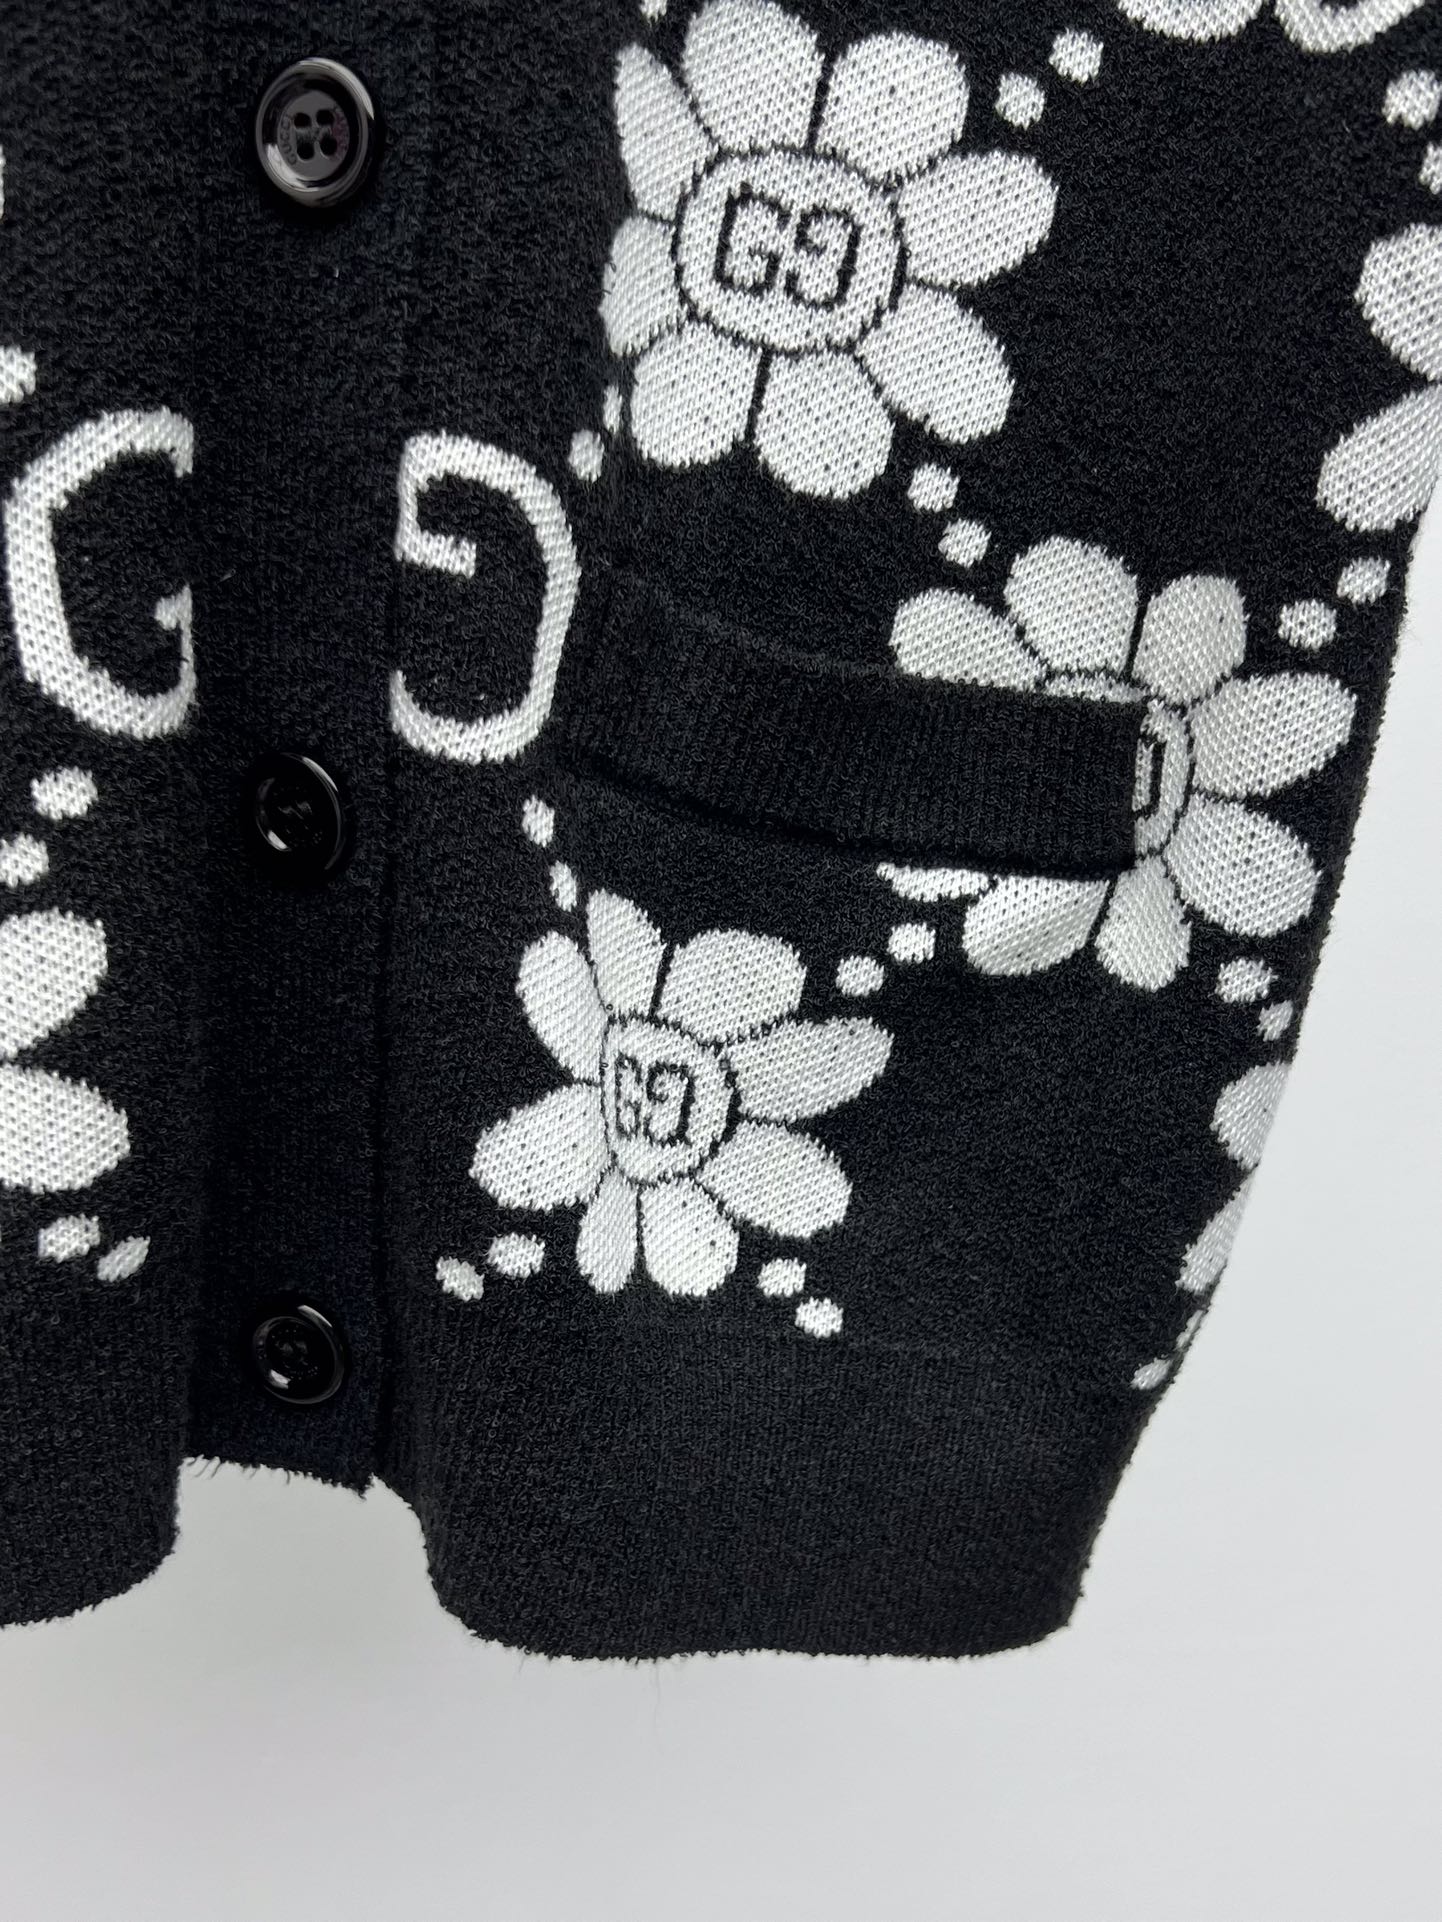 Gucc*花朵提花针织套装getit限定系列短款polo开衫半身裙黑色和白色GG花朵棉布提花由艺术家ha